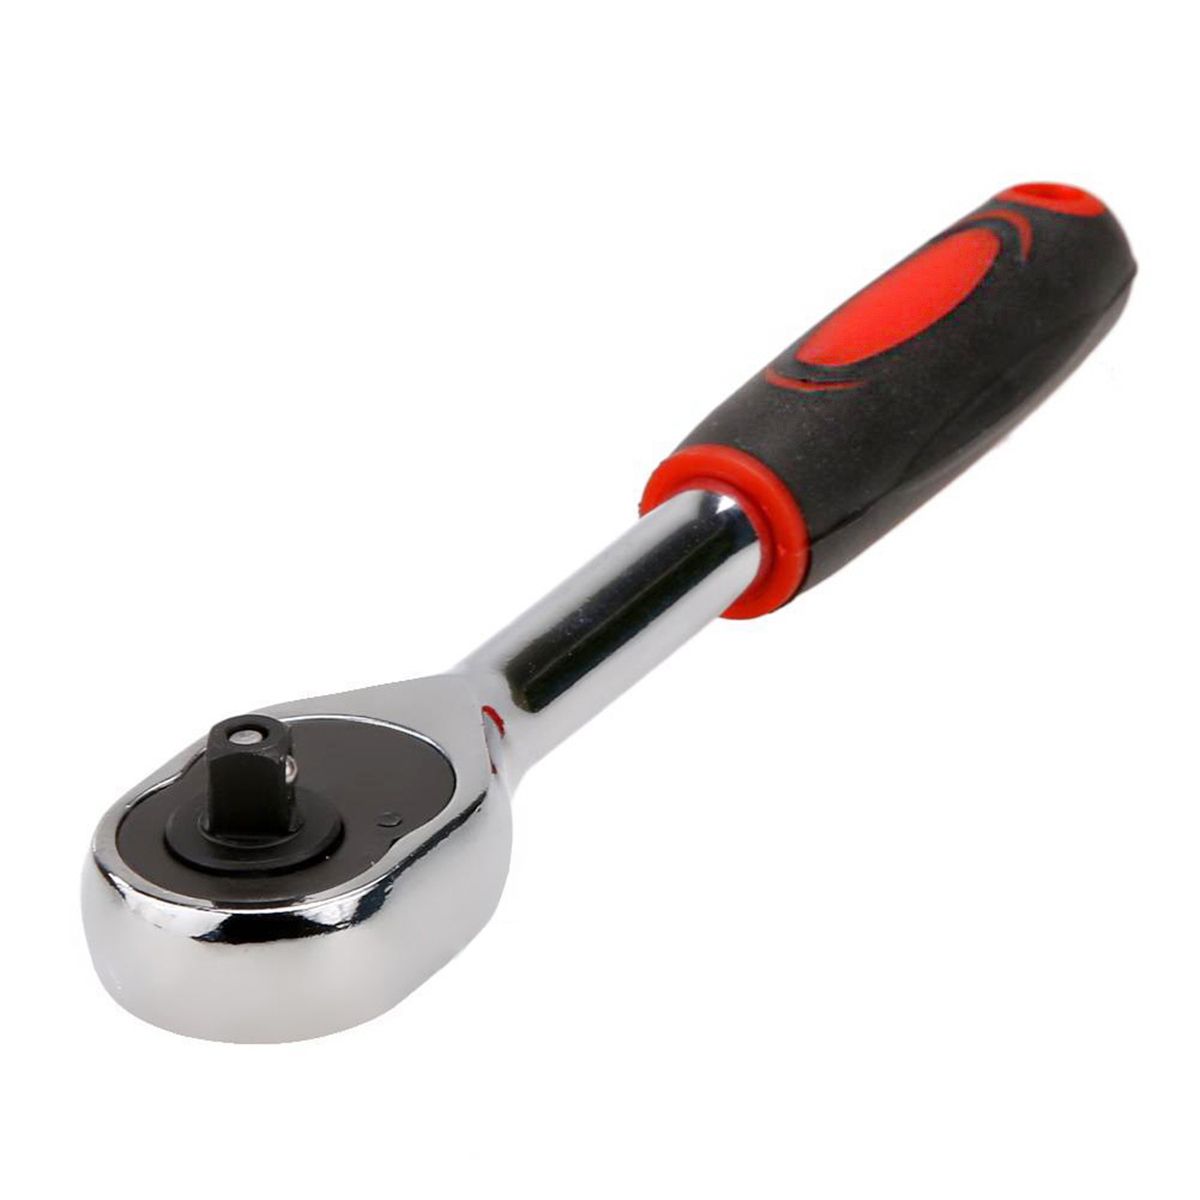 38-Handle-Drive-Socket-Ratchet-Spanner-Wrench-Quick-Release-24-Teeth-Repair-Tool-1387512